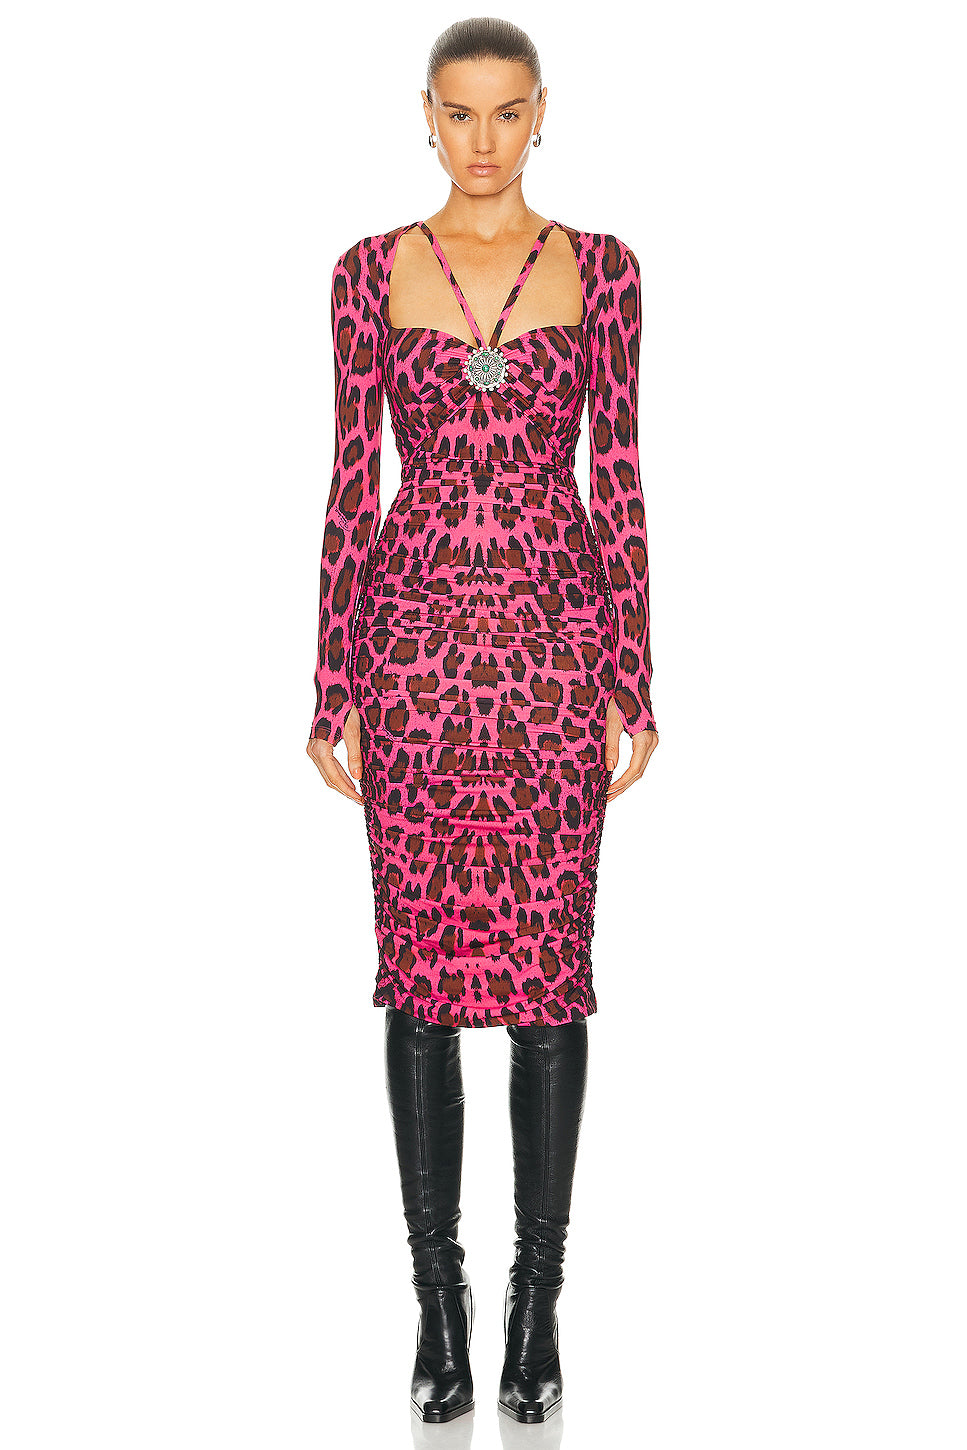 Leopard Bodycon Dress